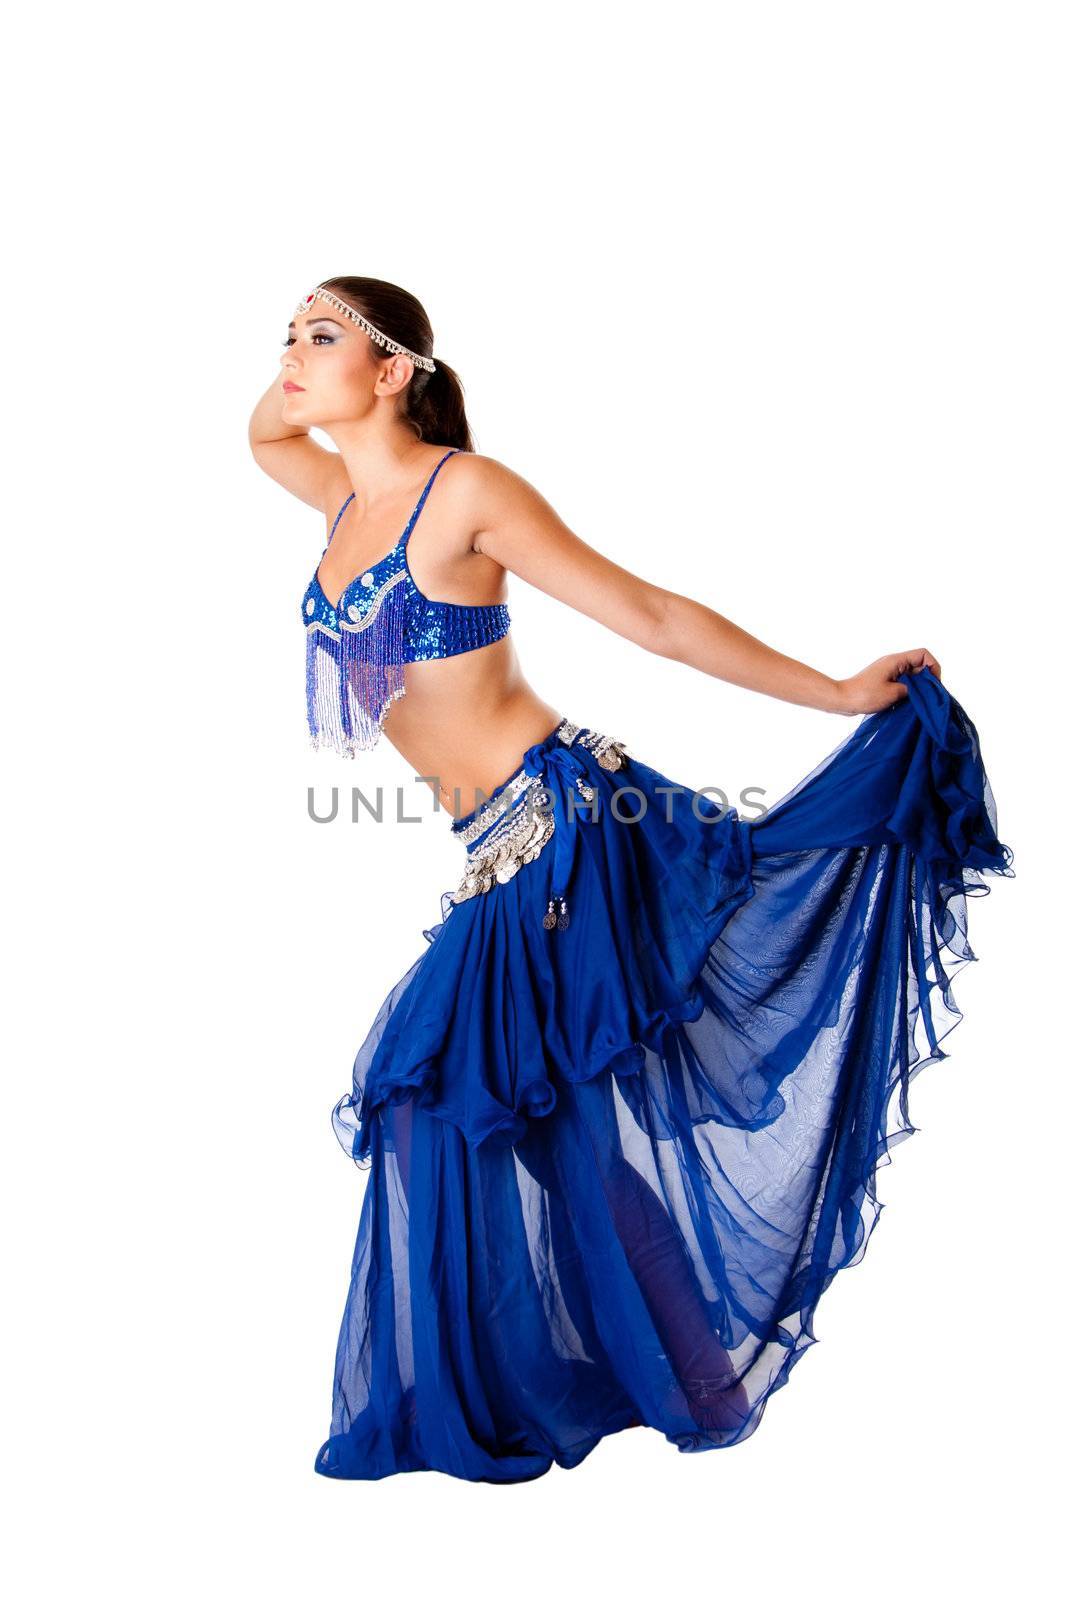 Harem belly dancer by phakimata